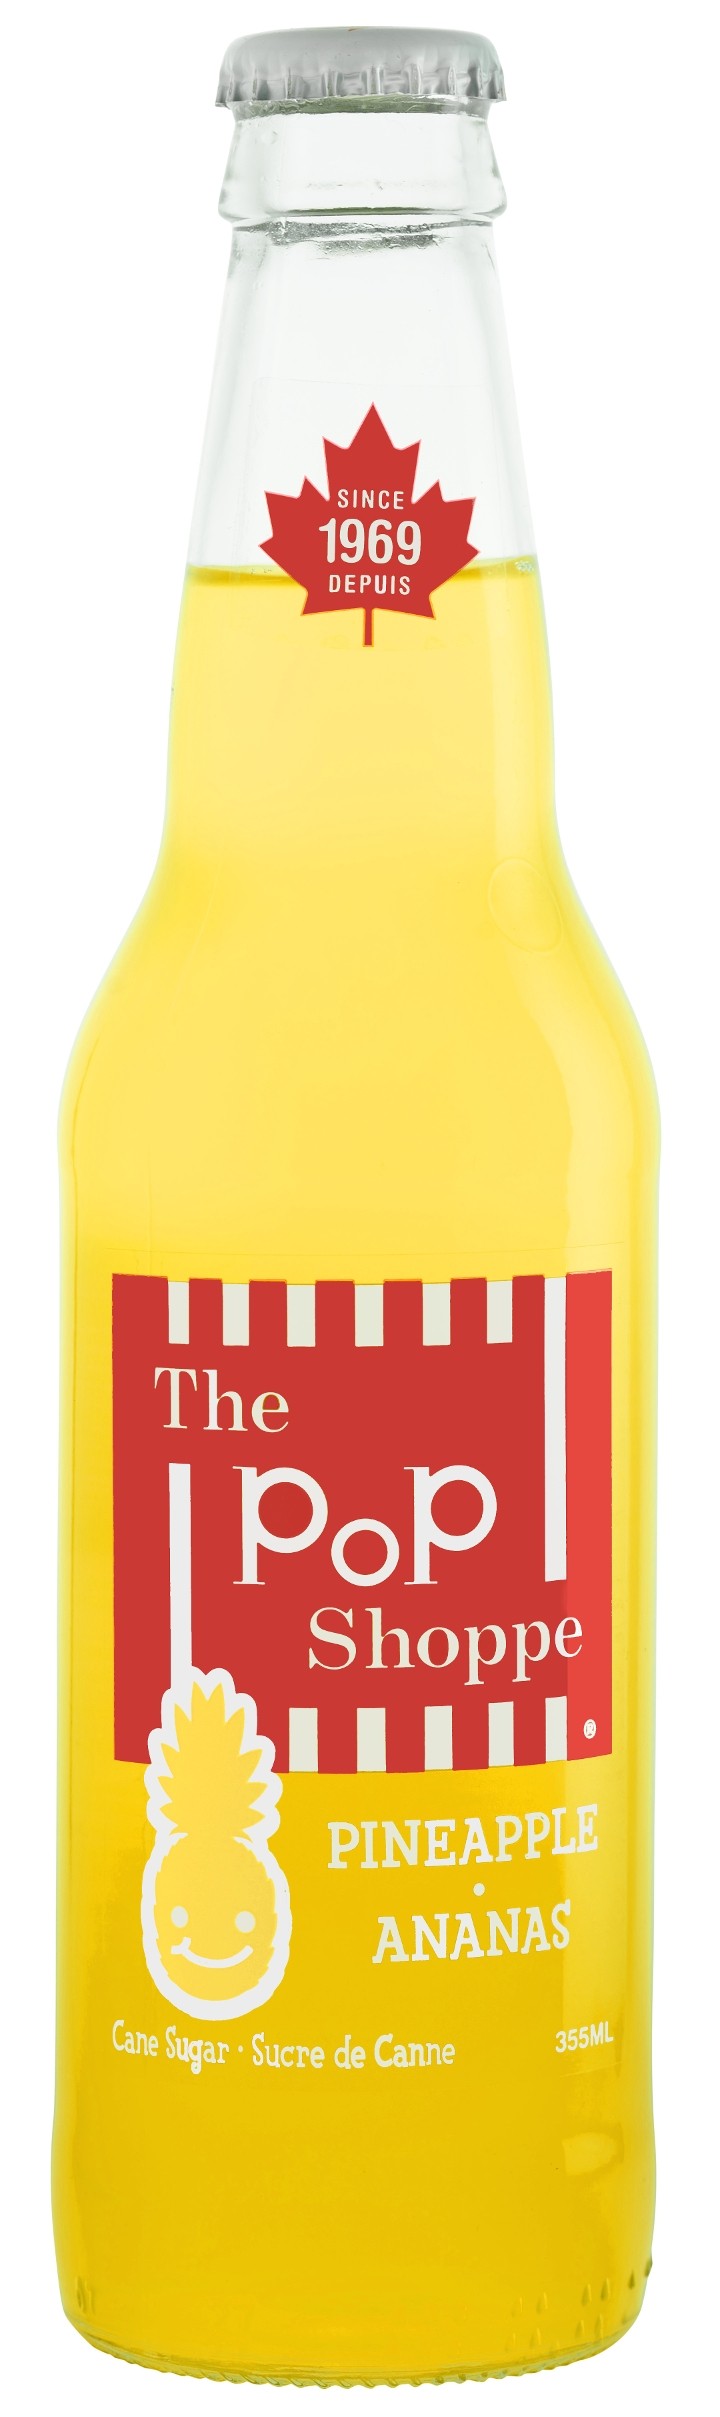 Pineapple Pop Shoppe